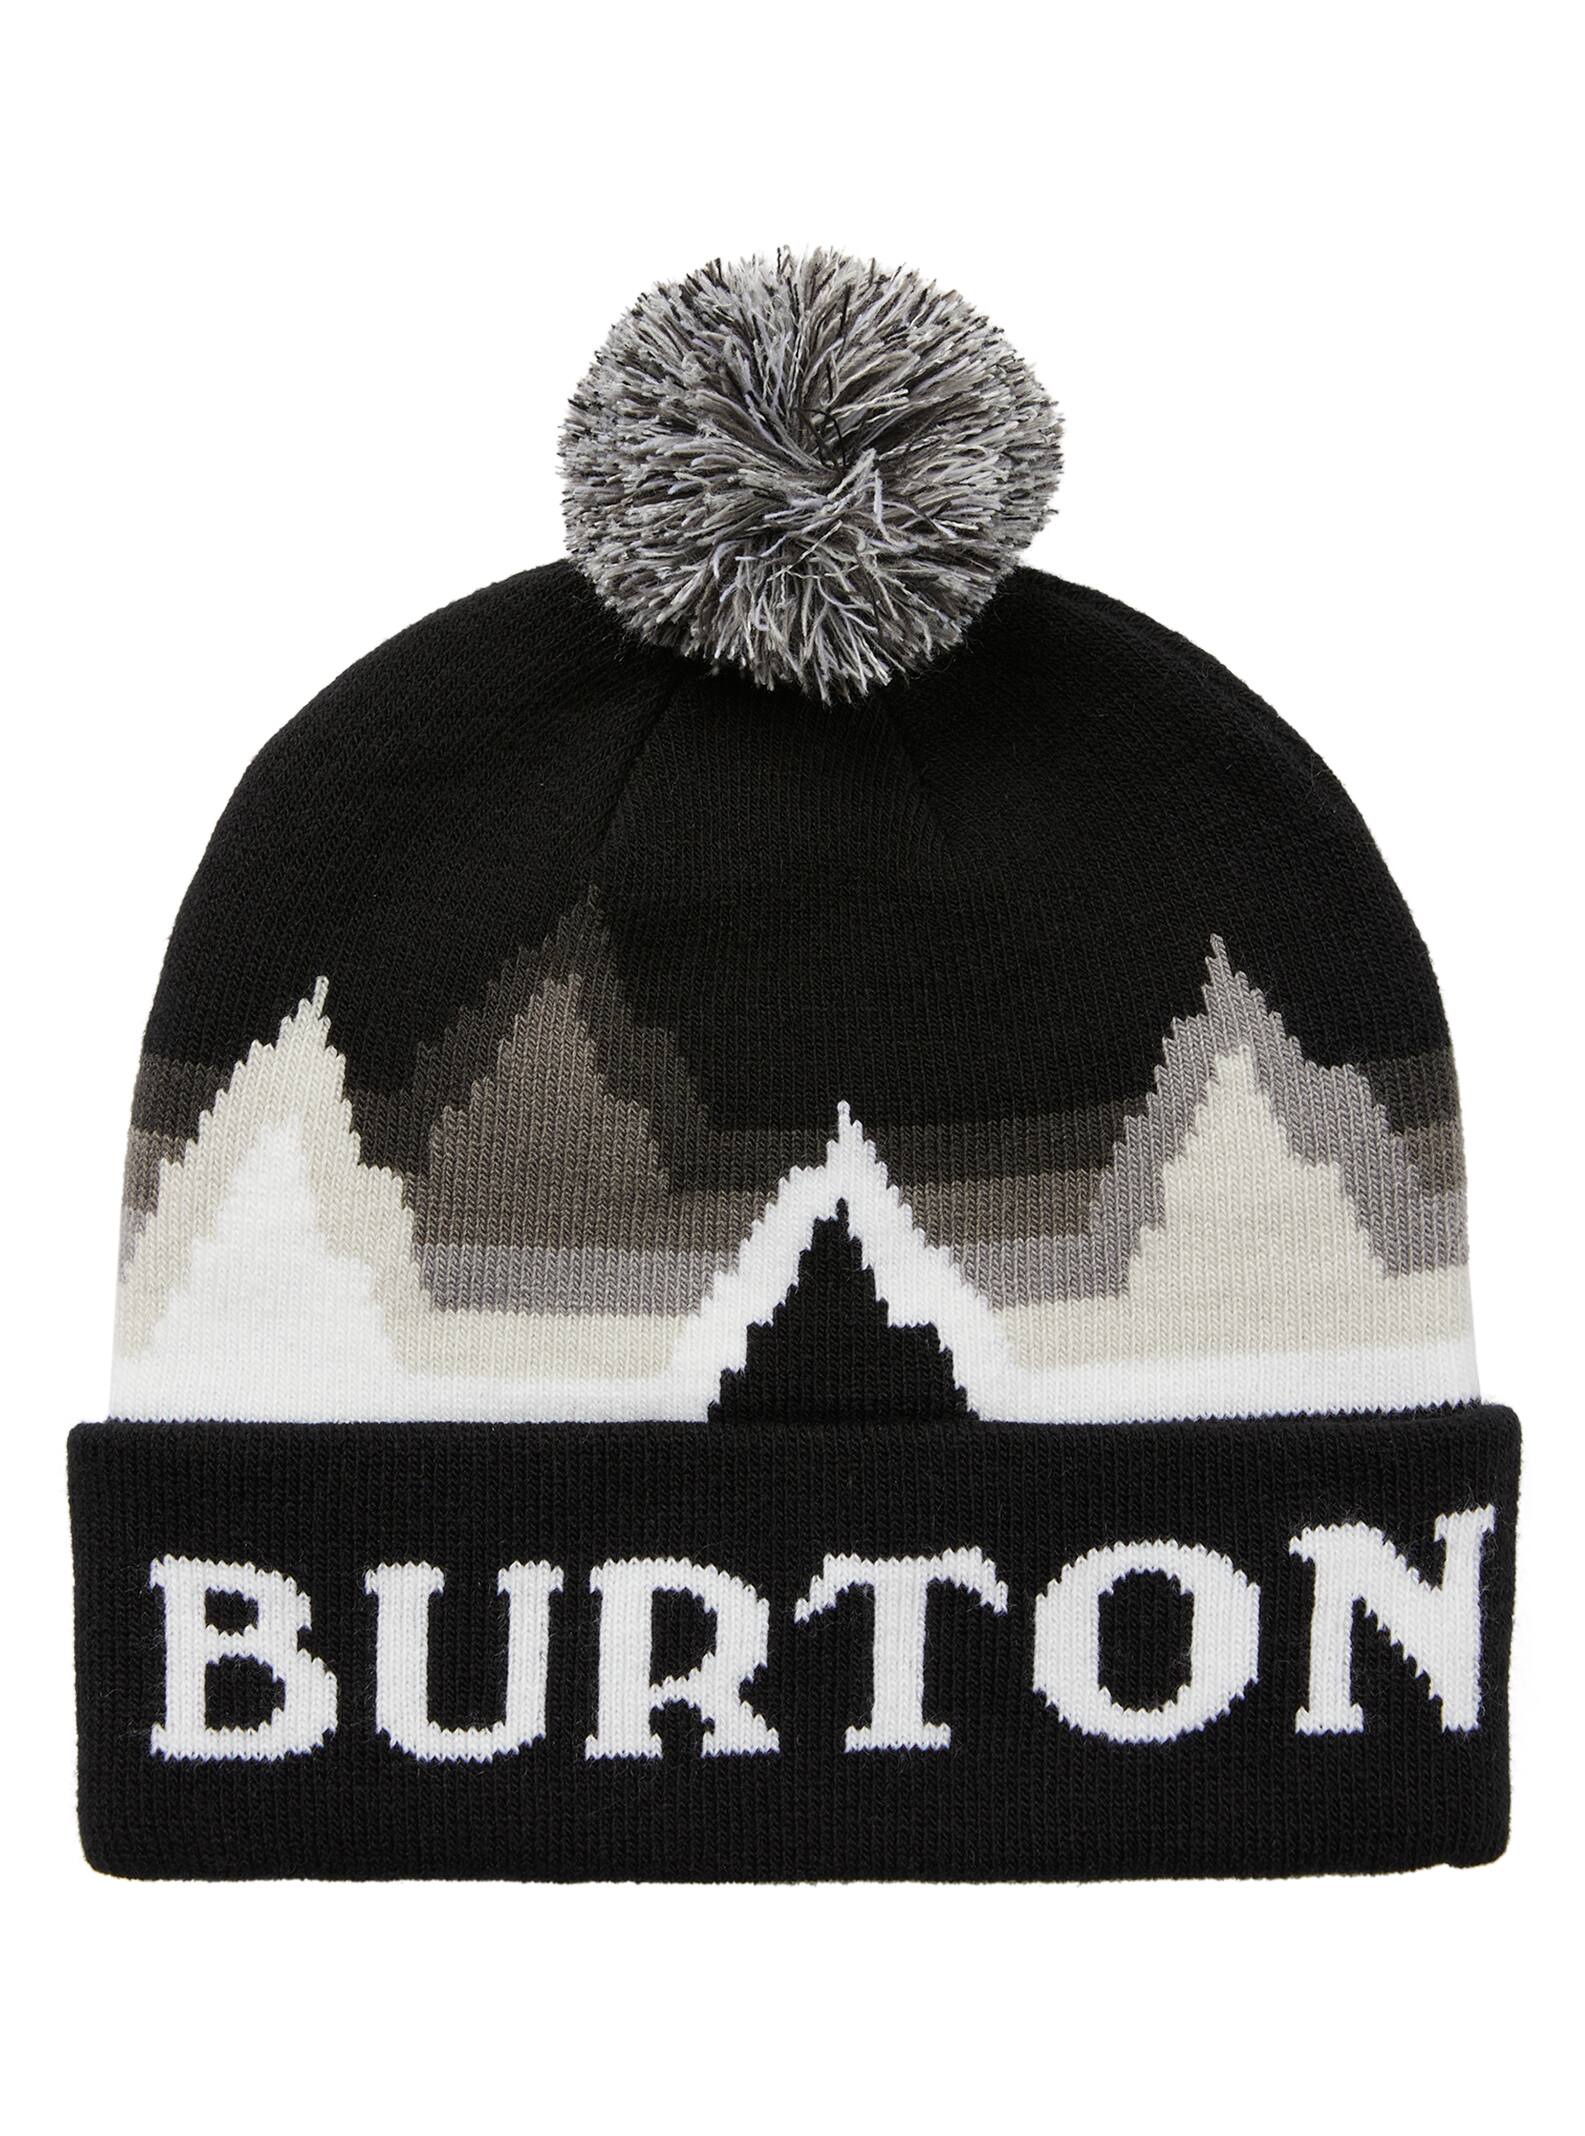 Kids' Hats & Beanies | Burton Snowboards US